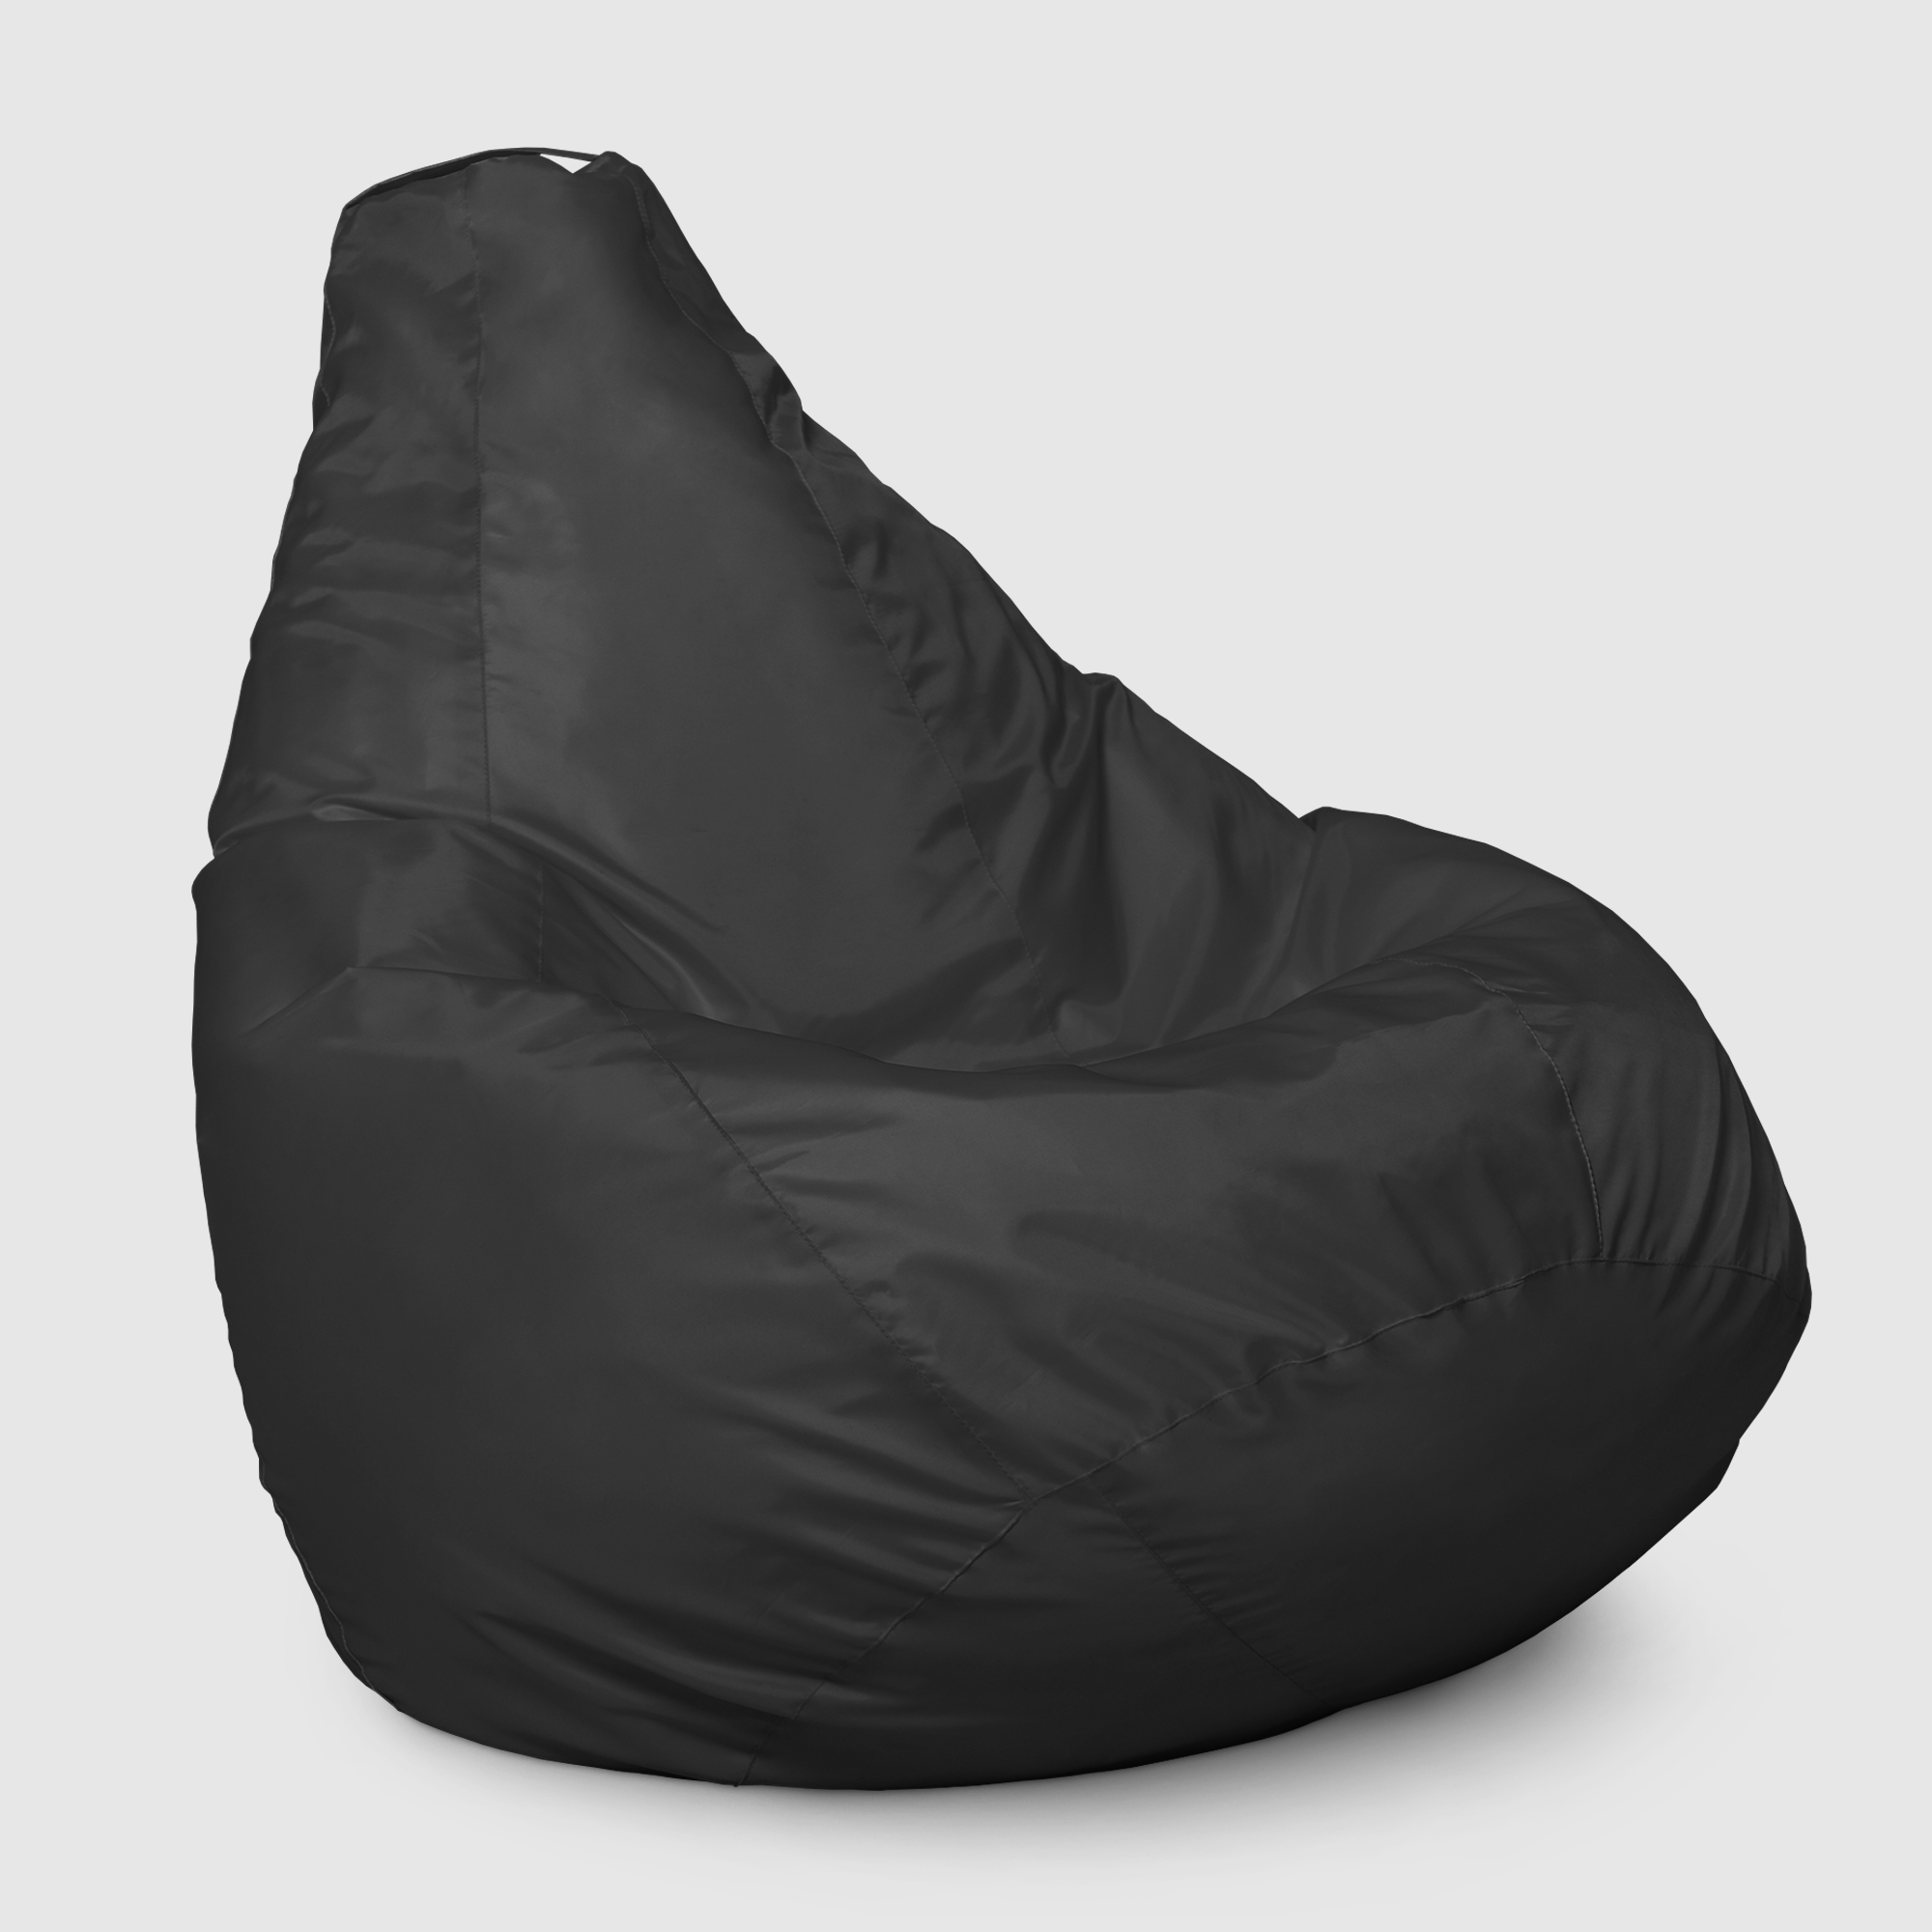 Кресло мешок Dreambag Меган xl черное 85х85х125 см кресло мешок dreambag меган xl голубое 85х85х125см